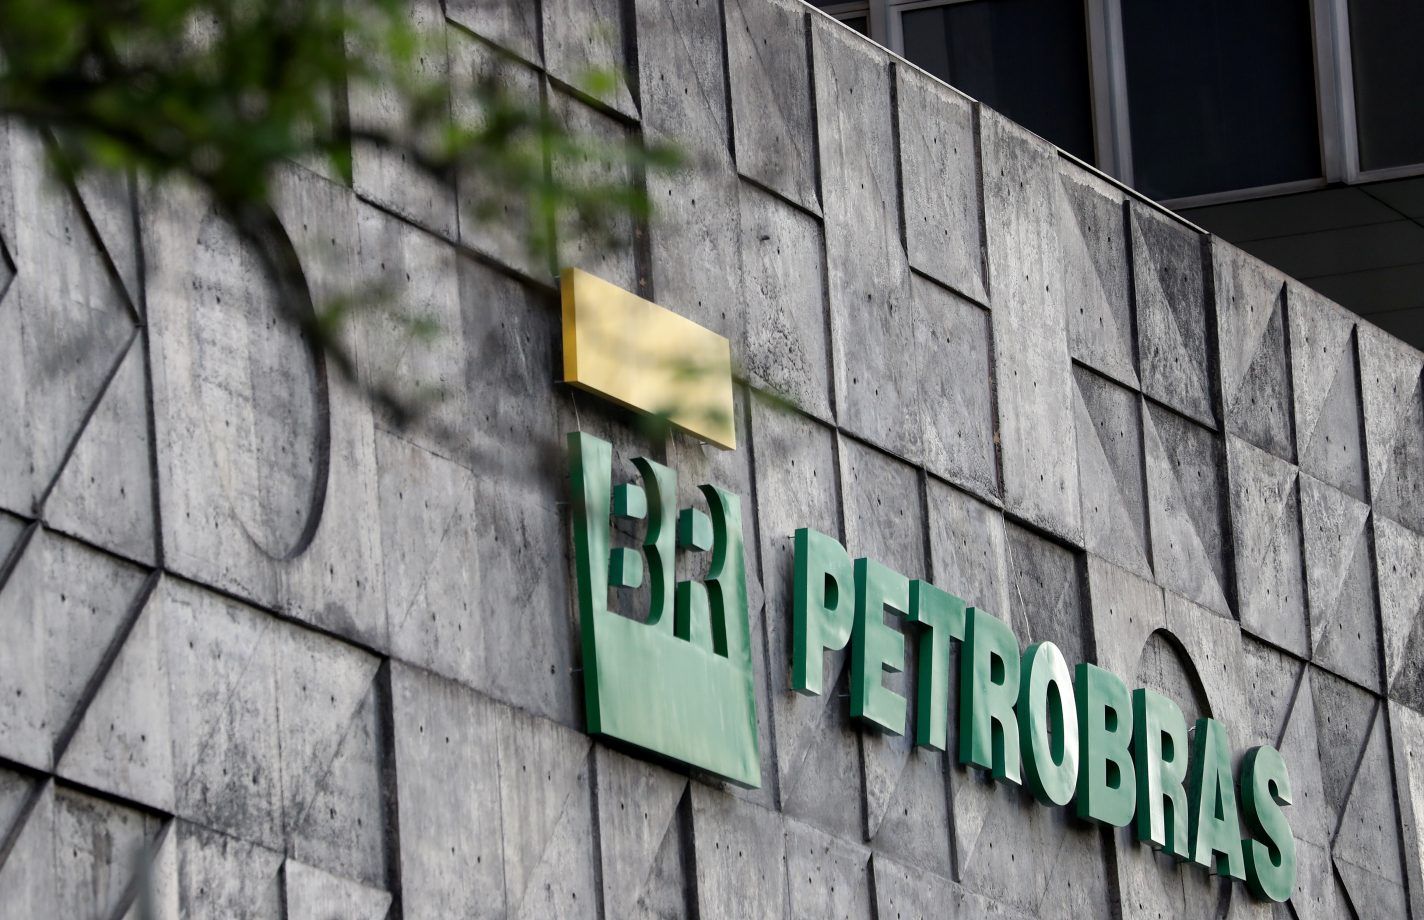 Petrobras asks banks to disburse US$8 billion to reinforce liquidity